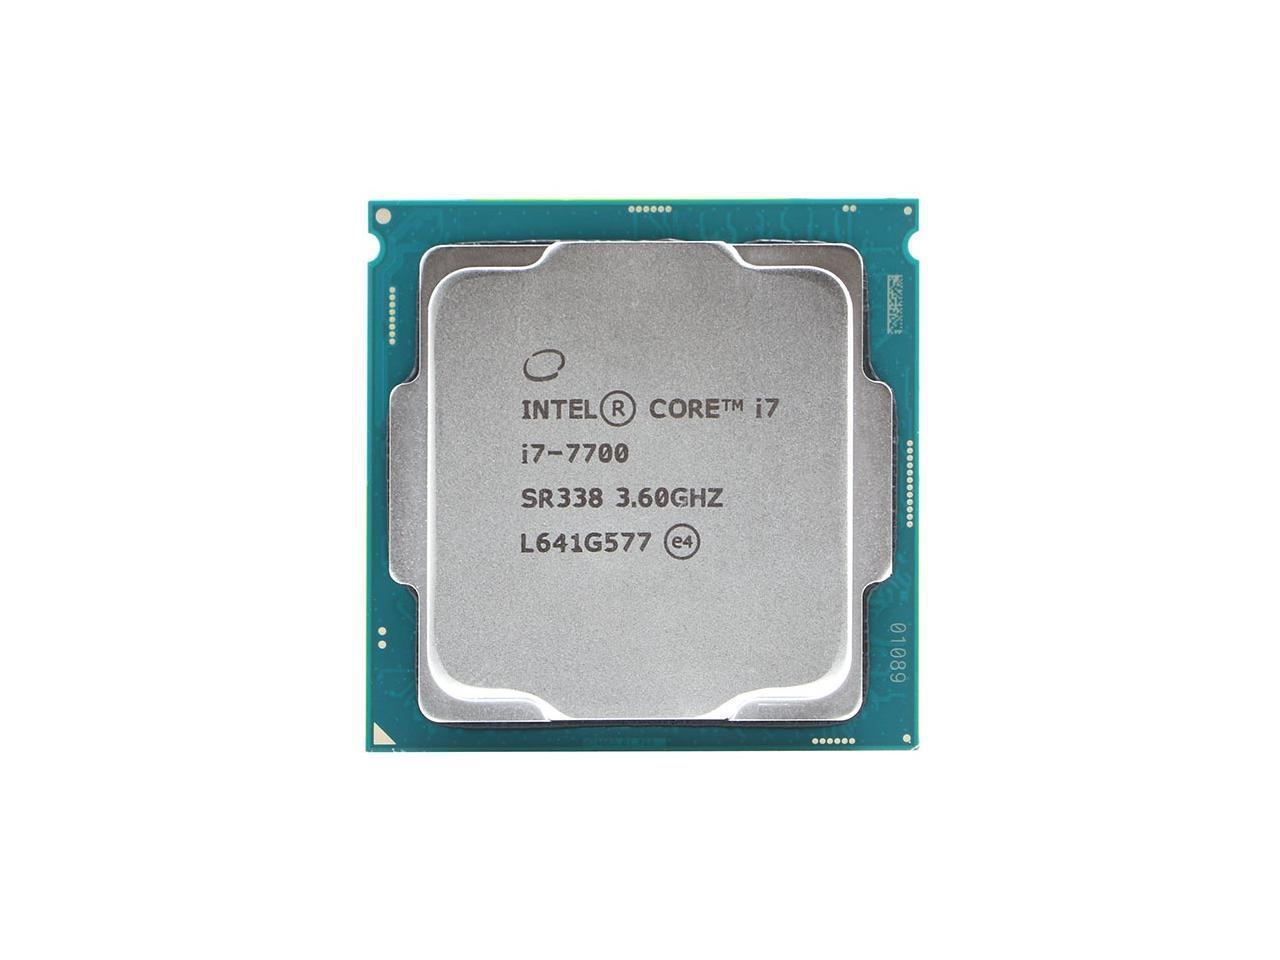 Tolk uitdrukken Thespian Intel Core i7-7700 Kaby Lake Desktop Processor i7 7th Gen, 4 Cores up to  4.2 GHz LGA 1151 65W CM8067702868314 OEM - Newegg.com